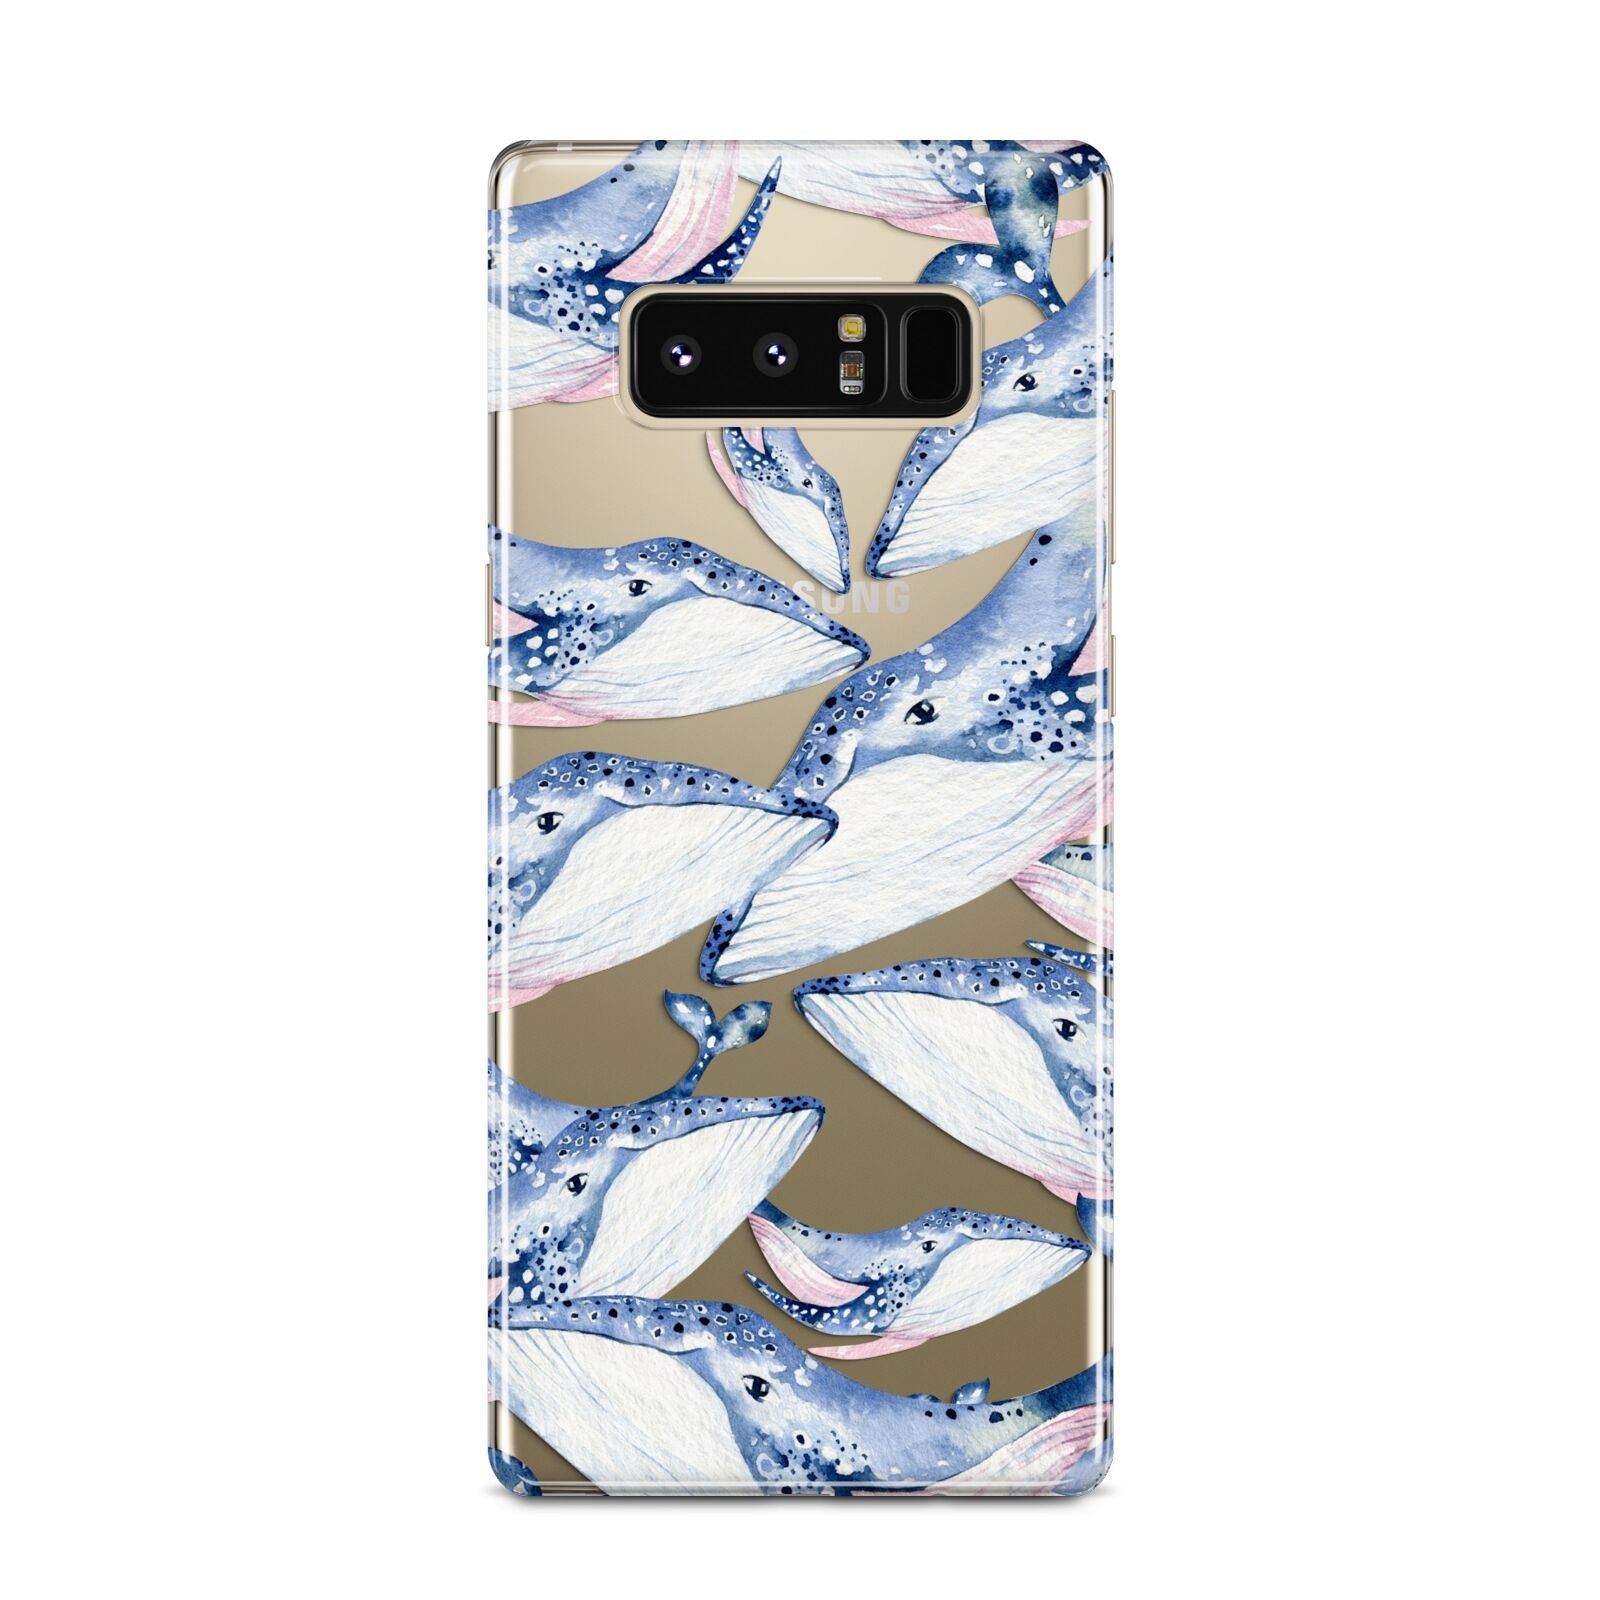 Whale Samsung Galaxy Note 8 Case